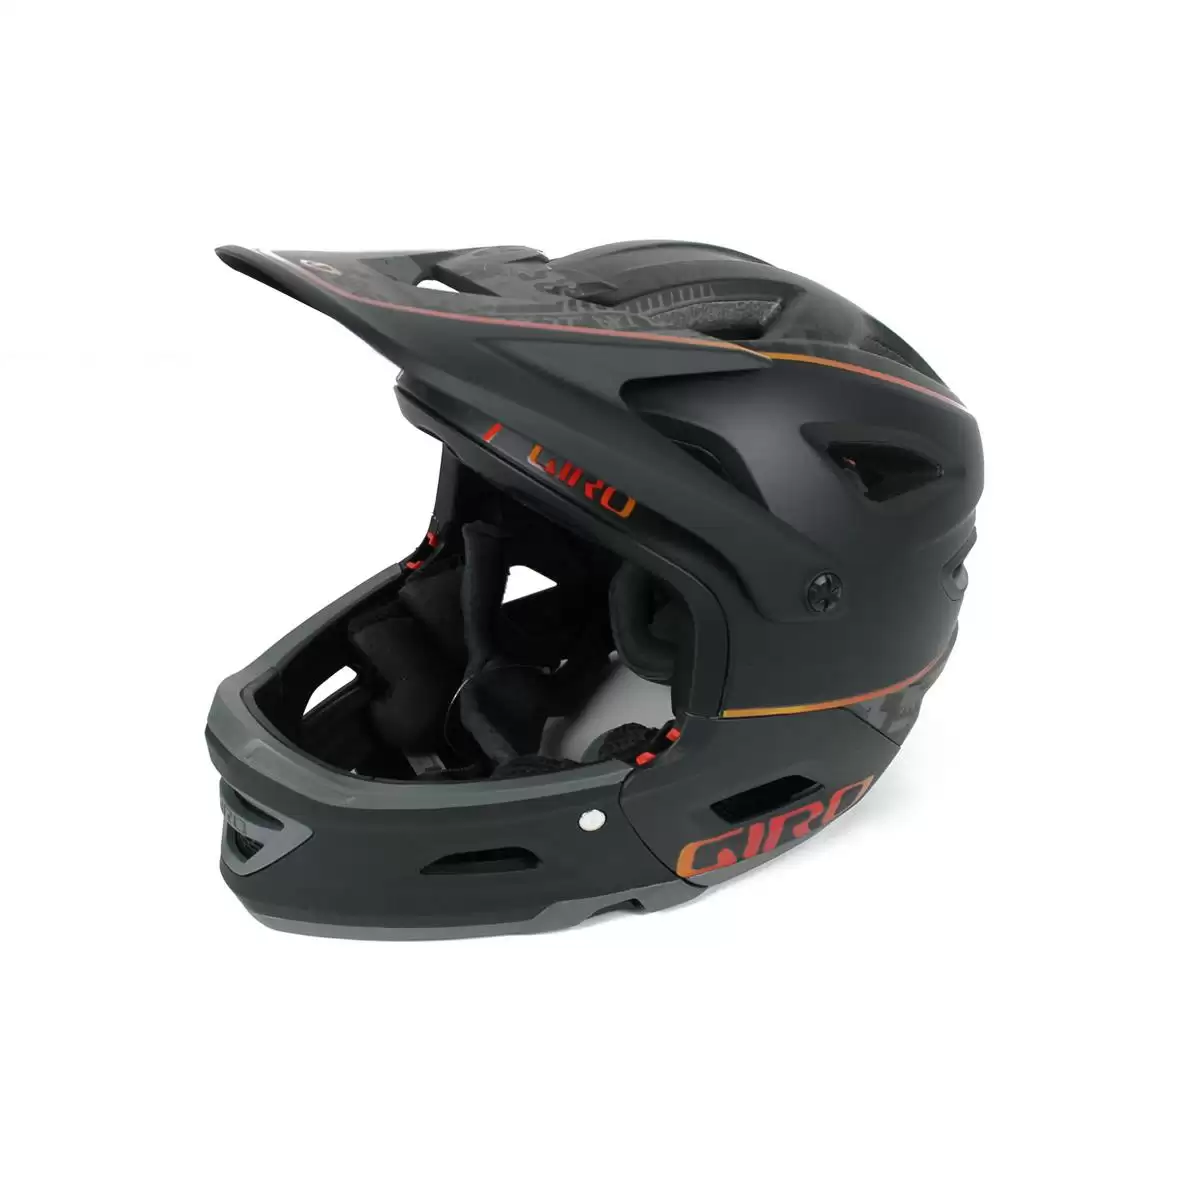 Helmet Switchblade Mips black size M (55-59cm) - image